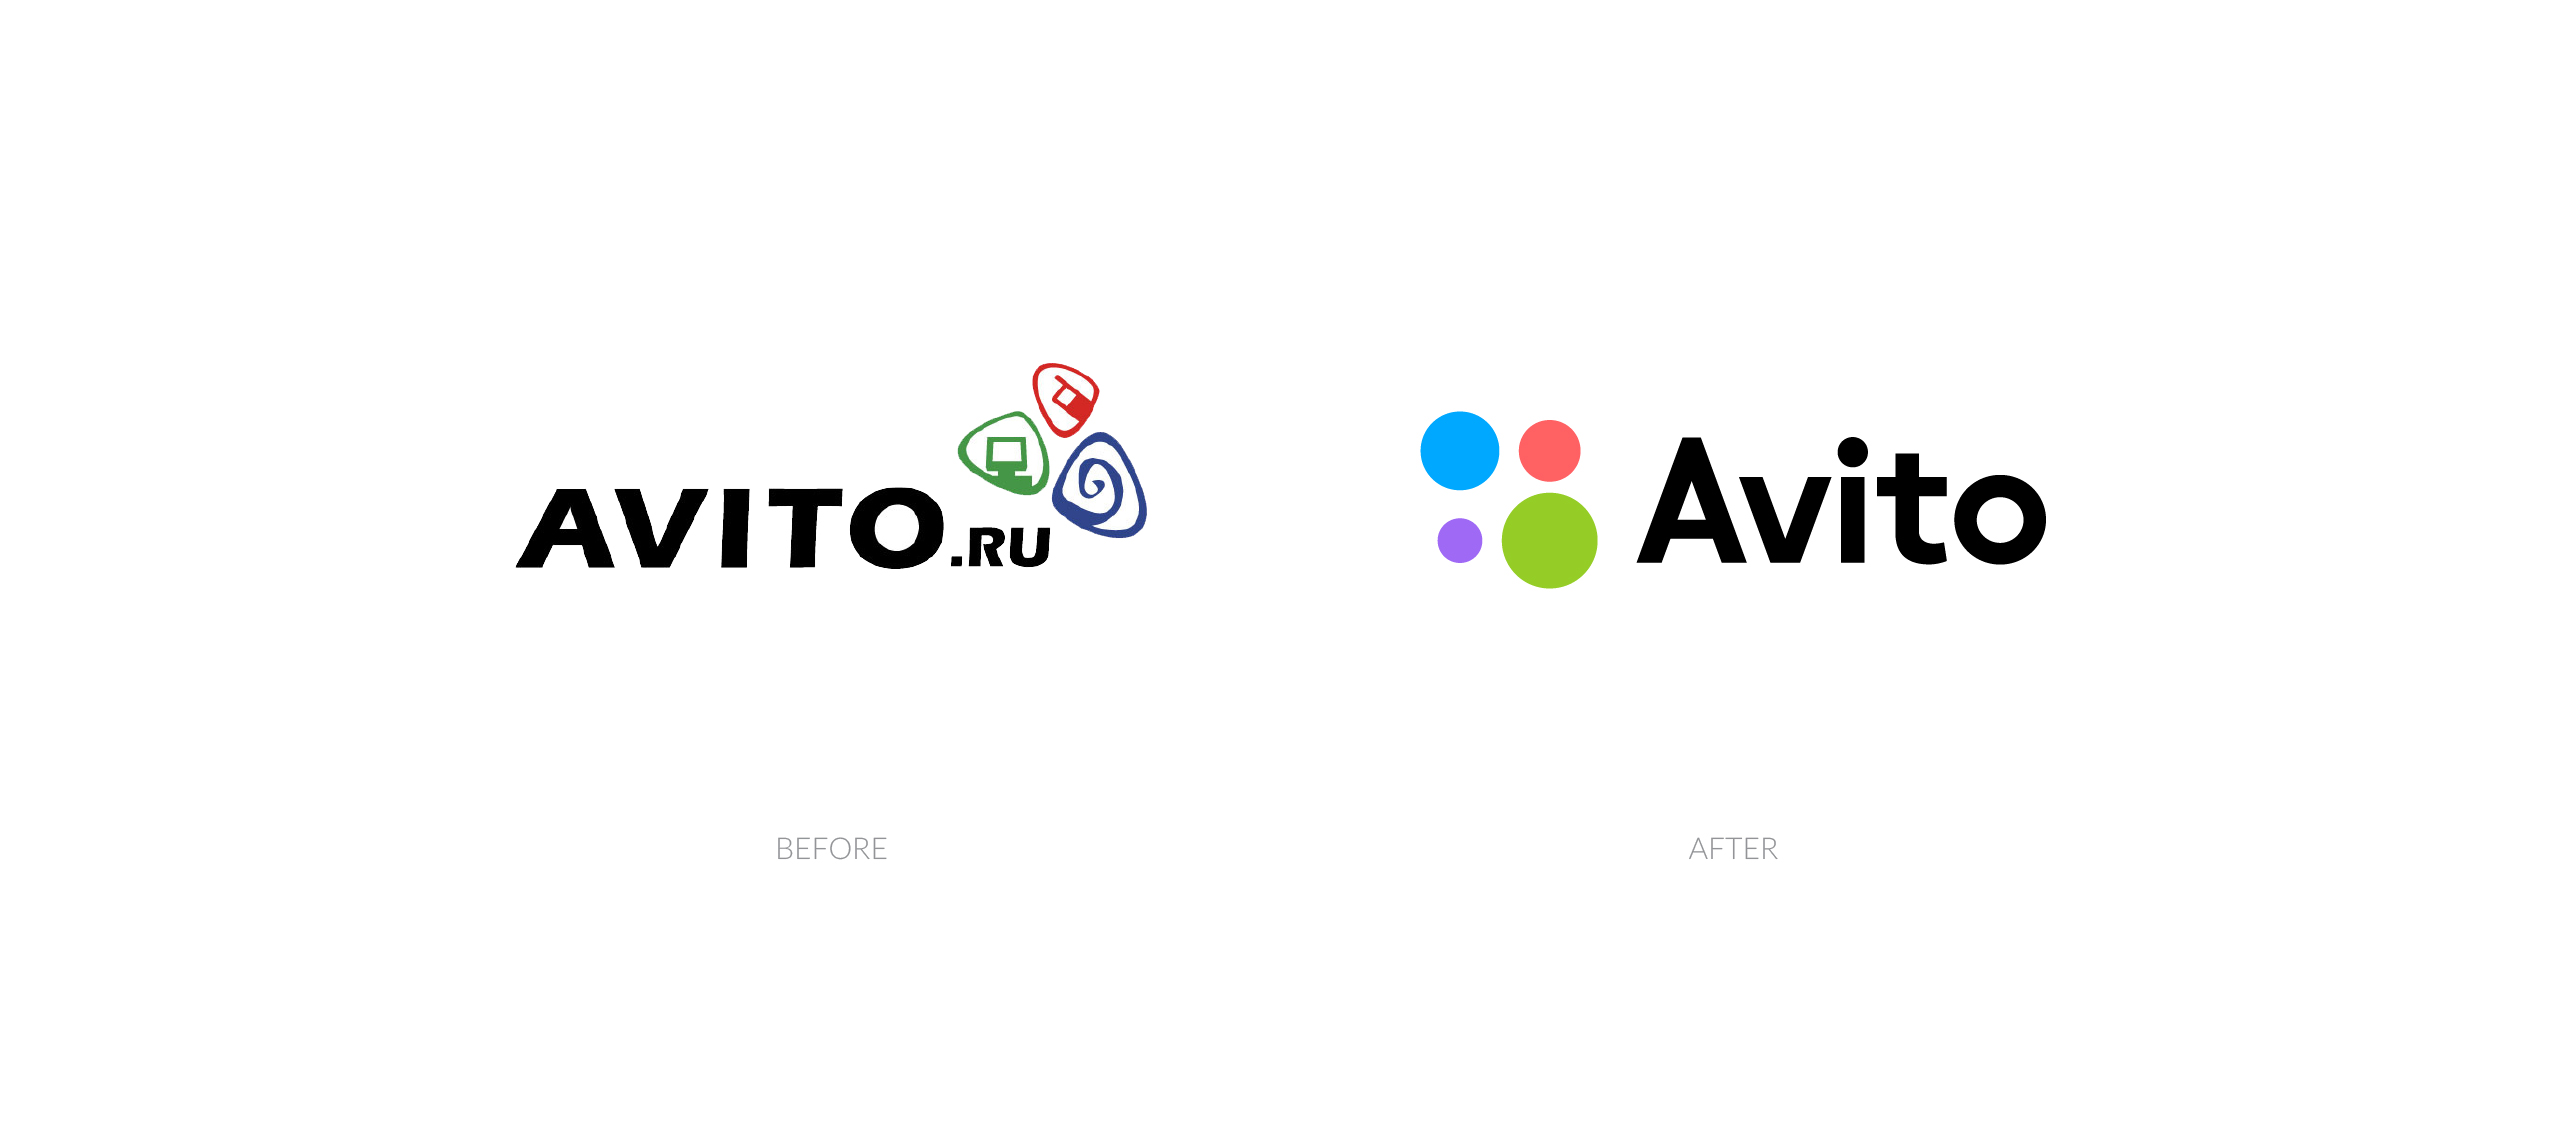 Avito, Авито, ребрендинг, фирменный стиль, айдентика, разработка бренда, брендинговое агентство Depot WPF, дизайн